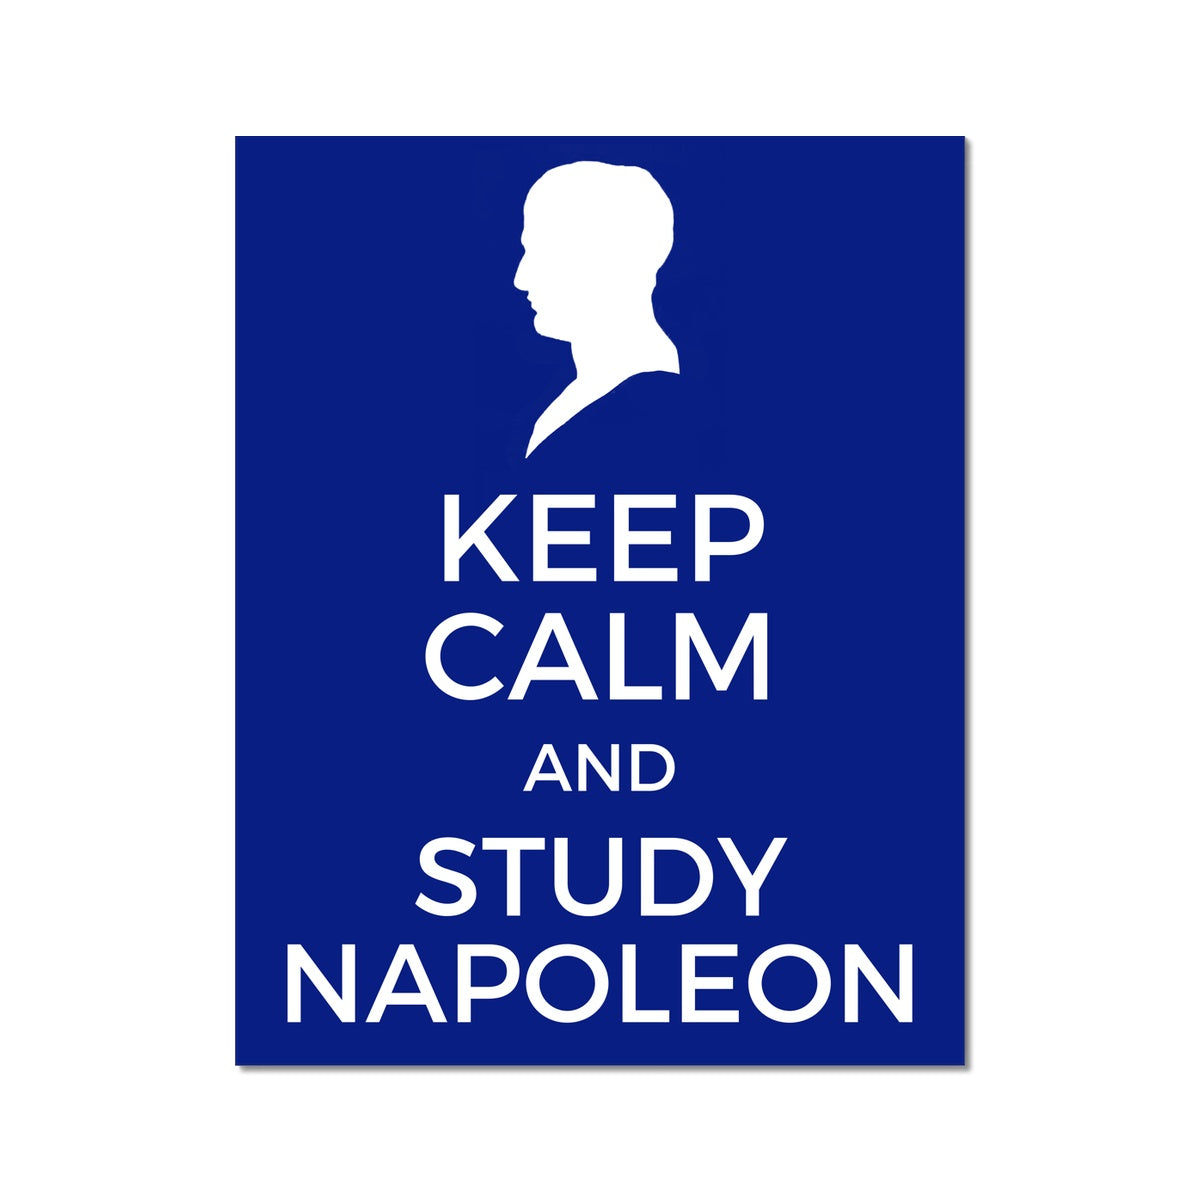 Keep Calm and Study Napoleon Poster - Napoleonic Impressions